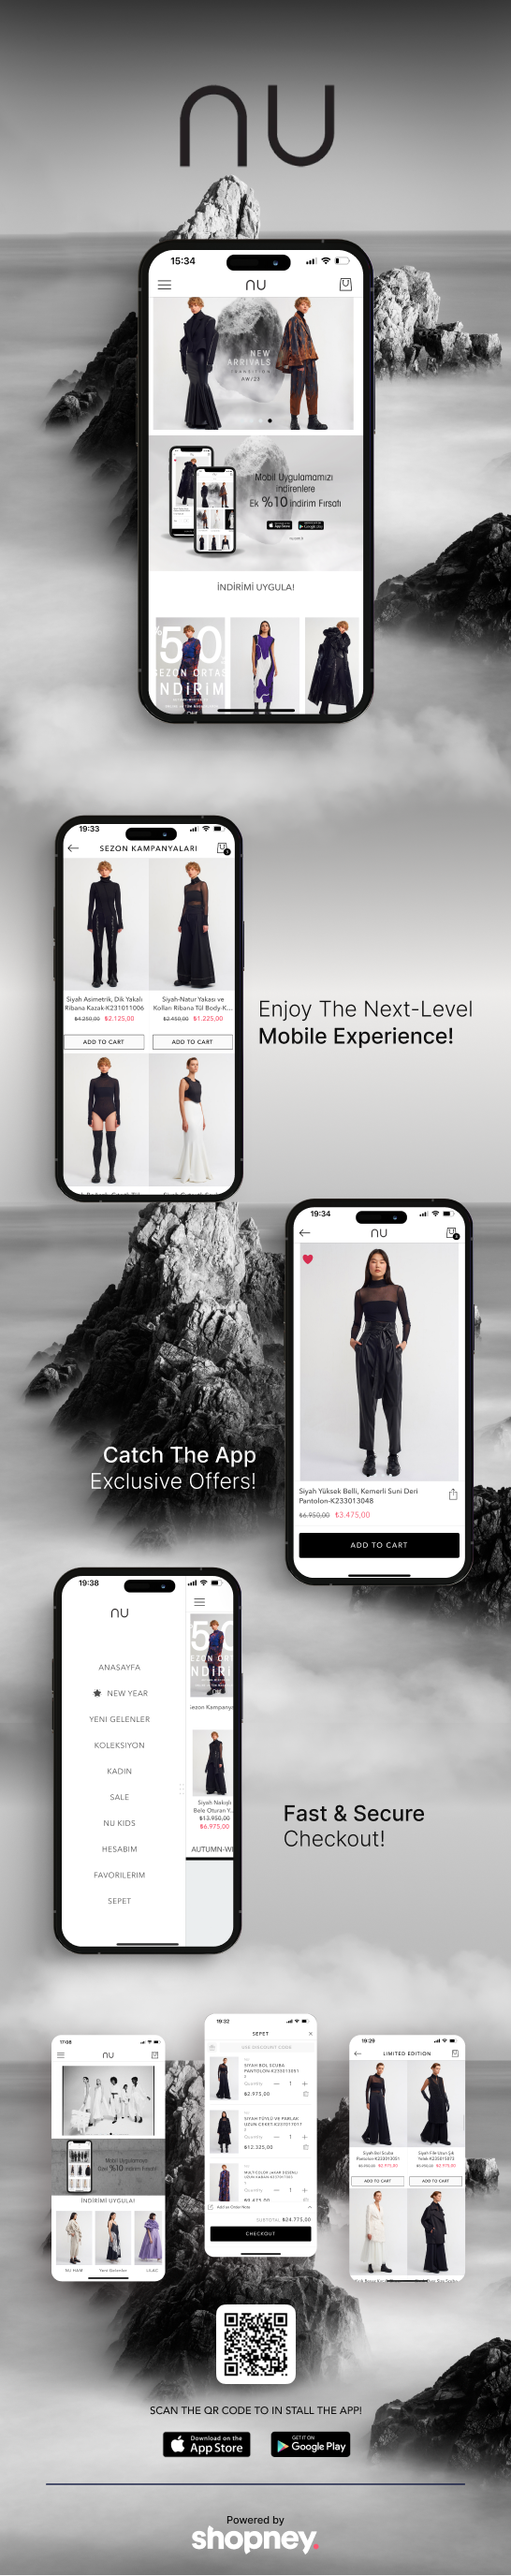 the mobile app design of Nu app